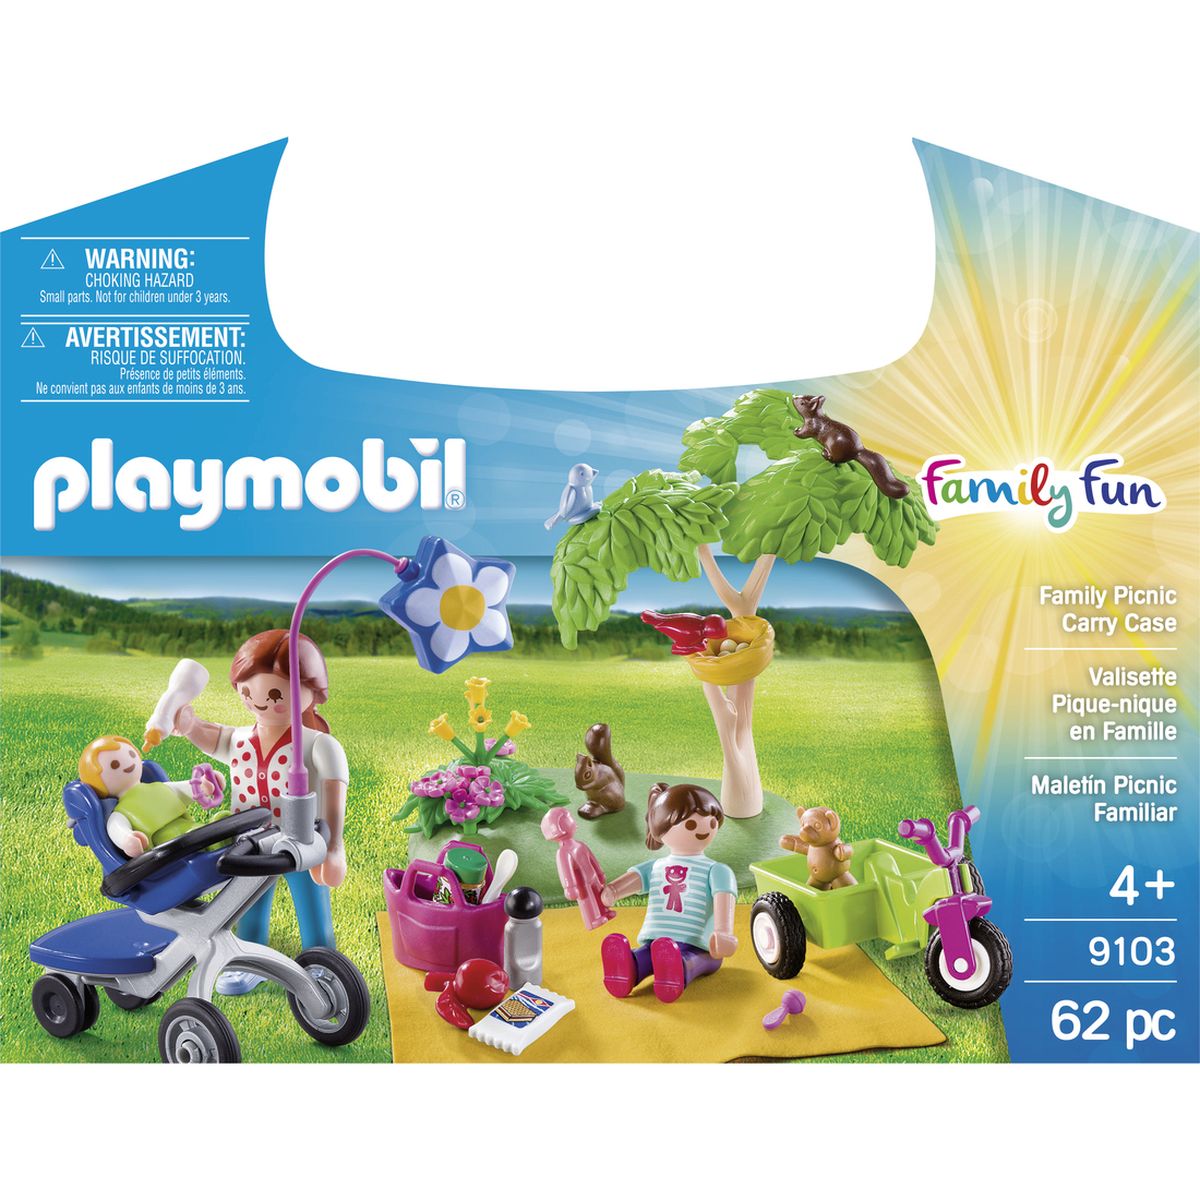 9103 Valisette Pique Nique En Famille, 'playmobil' Family Fun - N